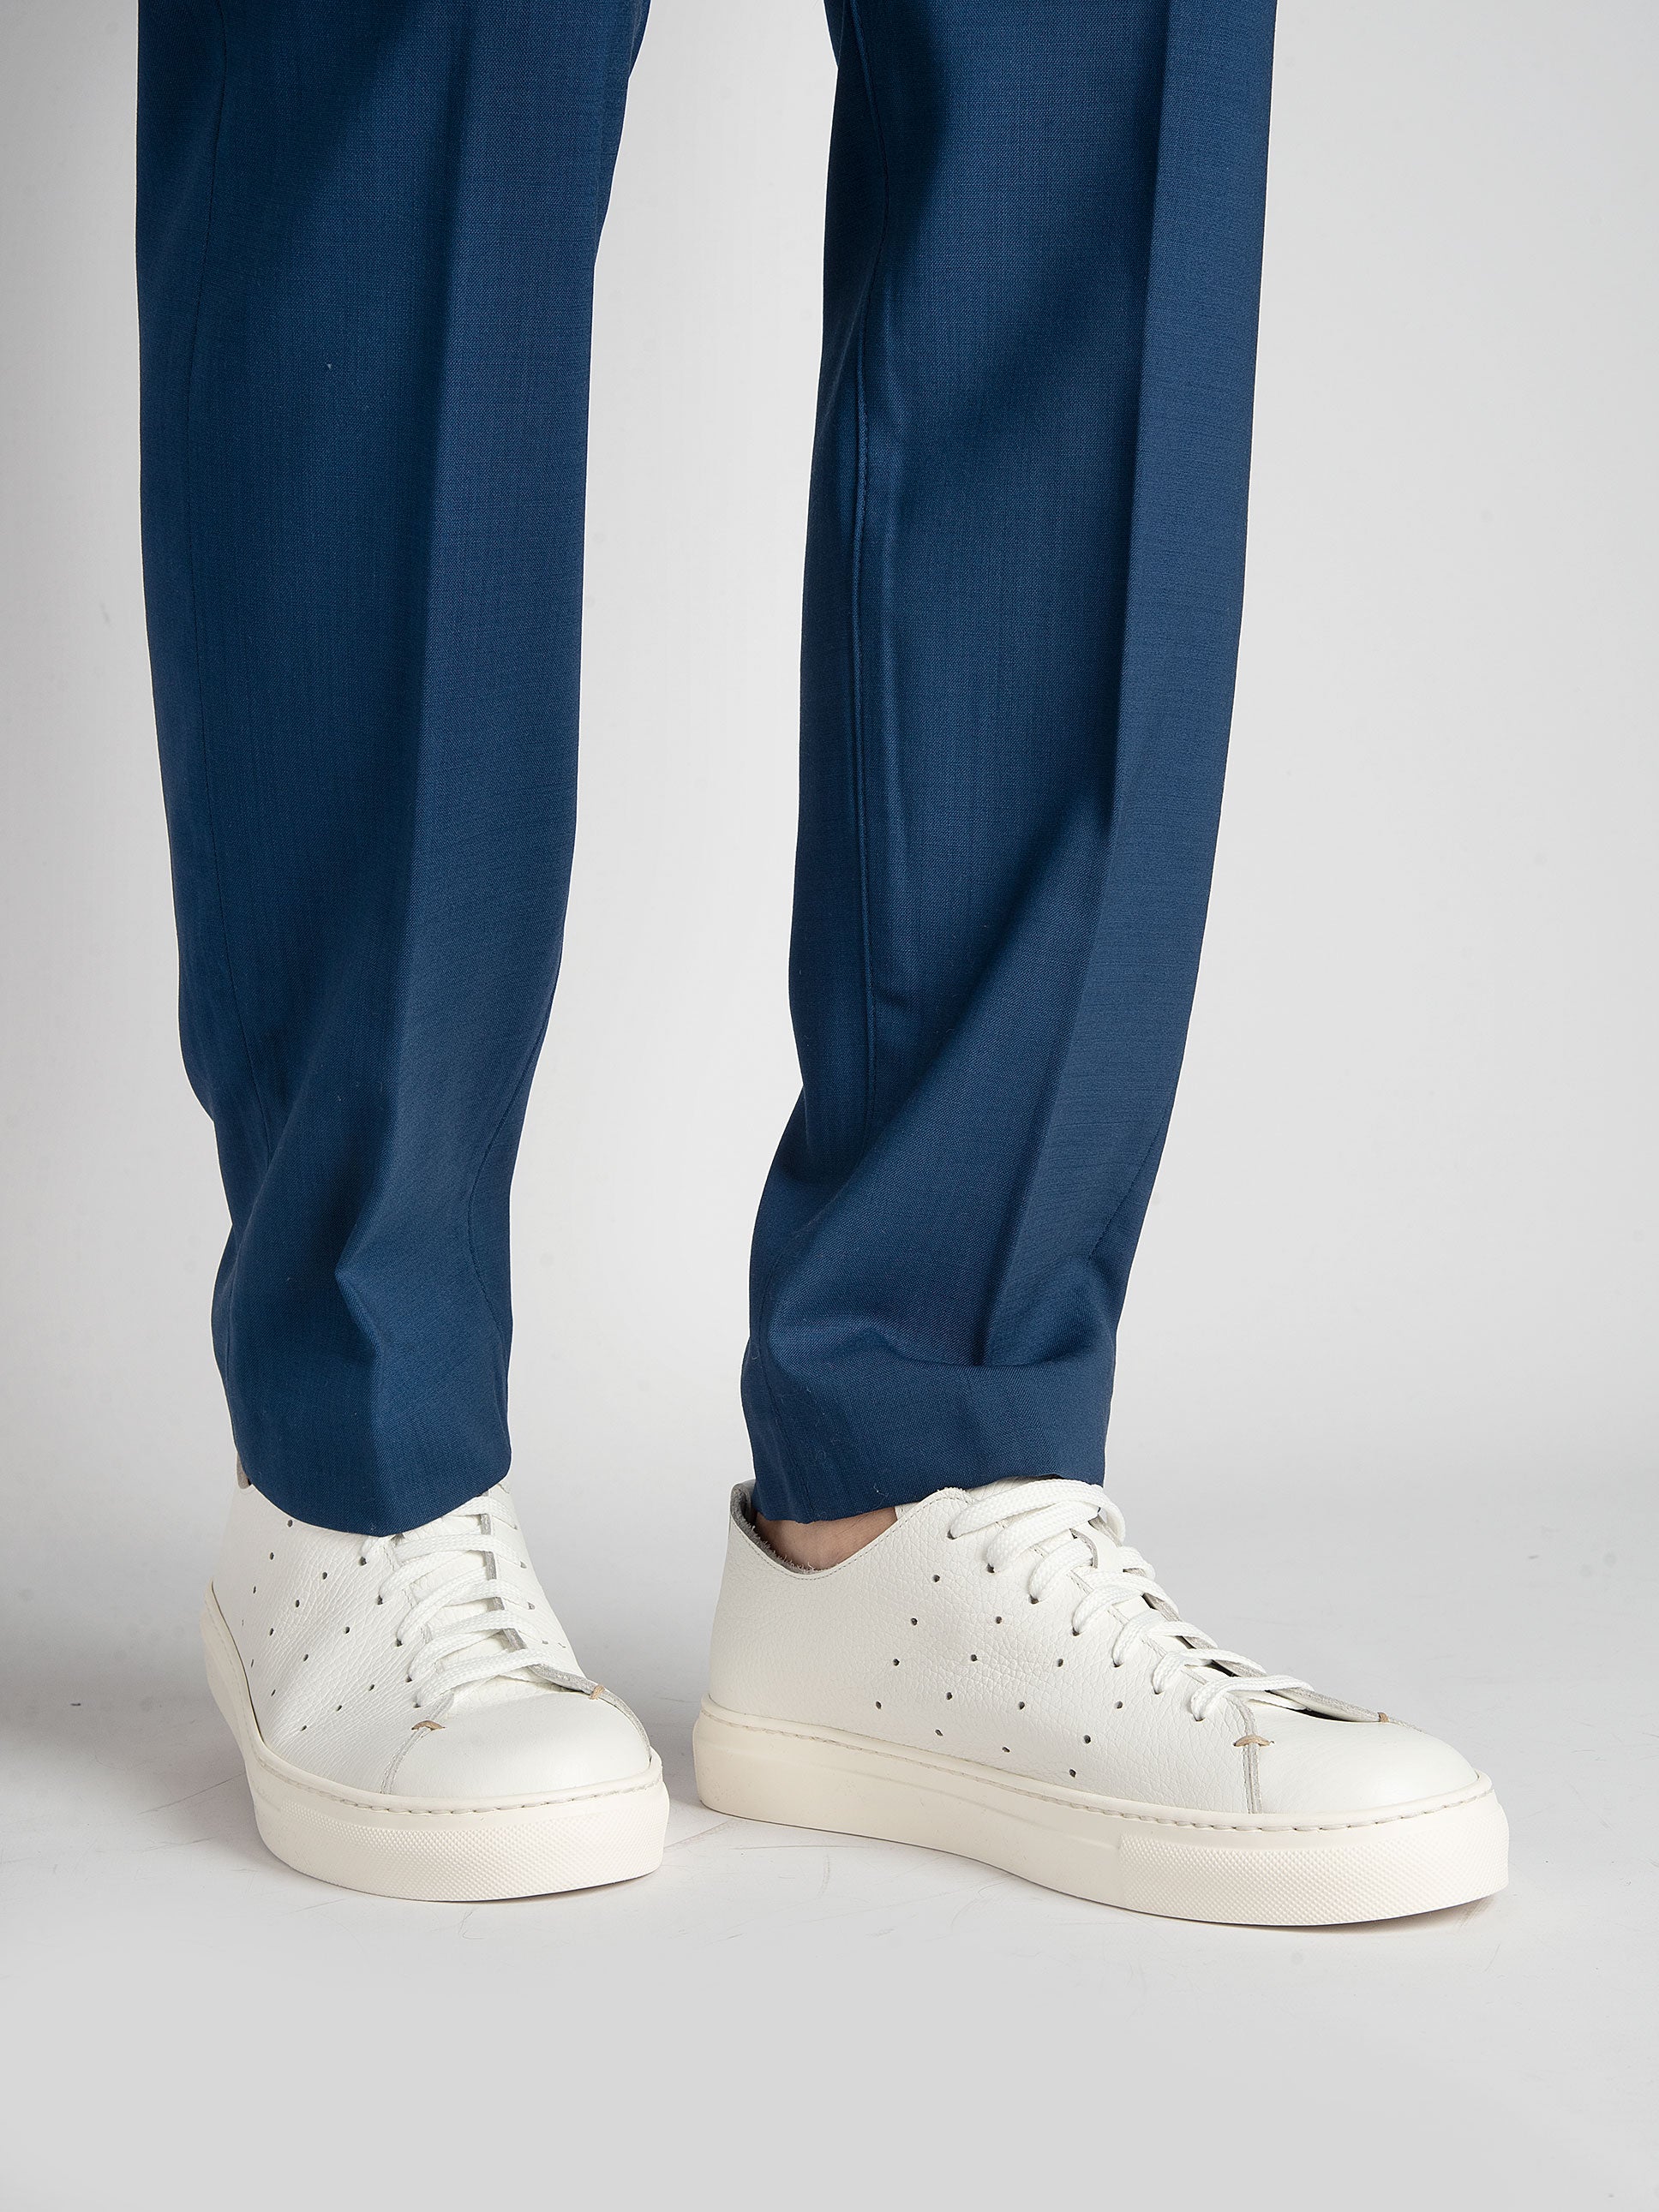 Pantalone 'S.mitte' Lana - Blu Royal